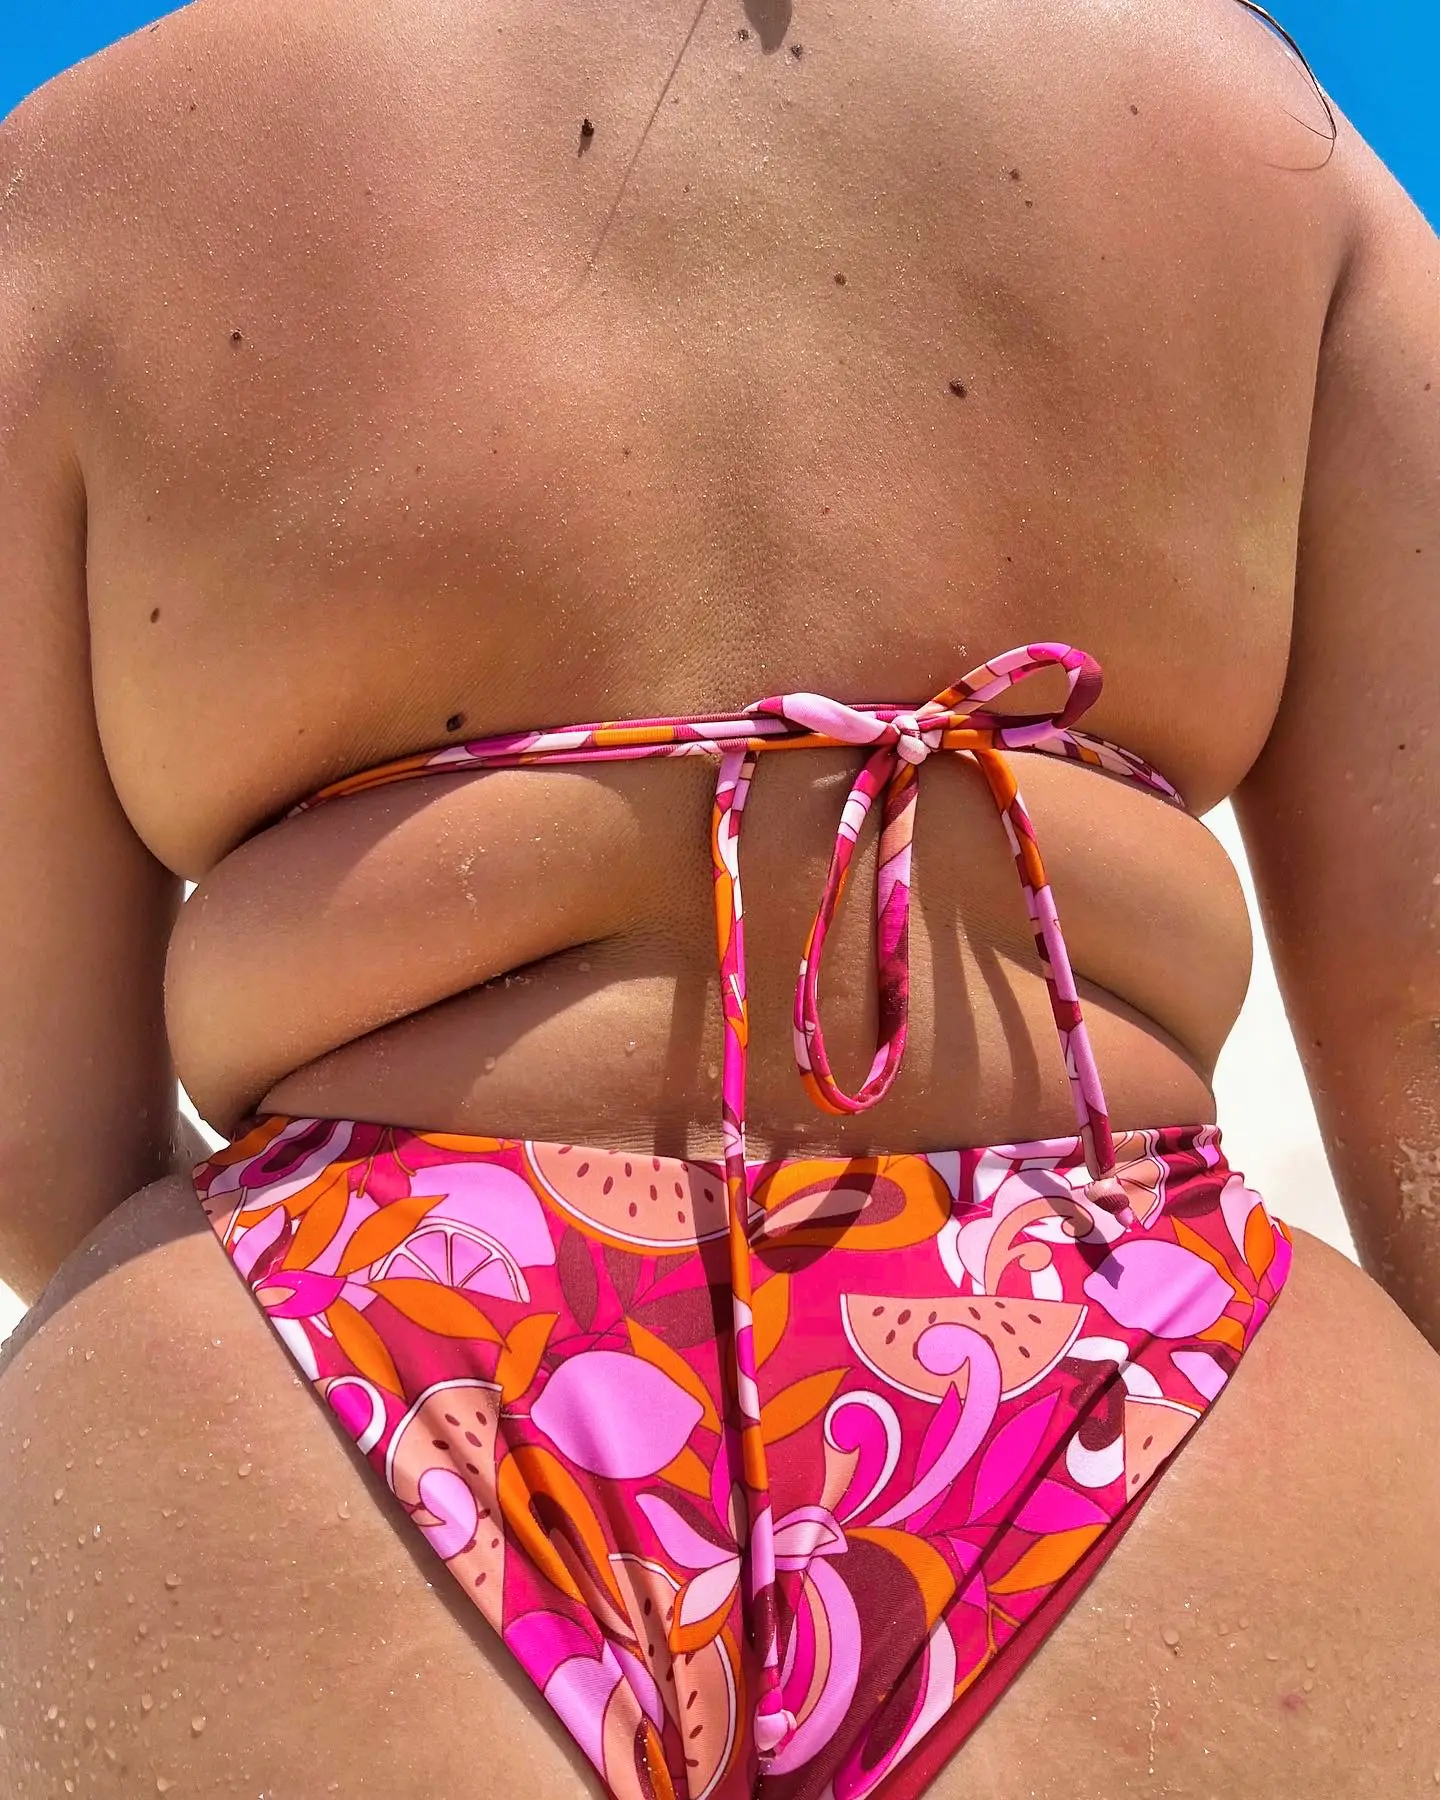 Pin by 𝒊𝒍𝒚 . ♡ on WOMEN.  Curvy body inspiration, Body positive  photography, Bikinis